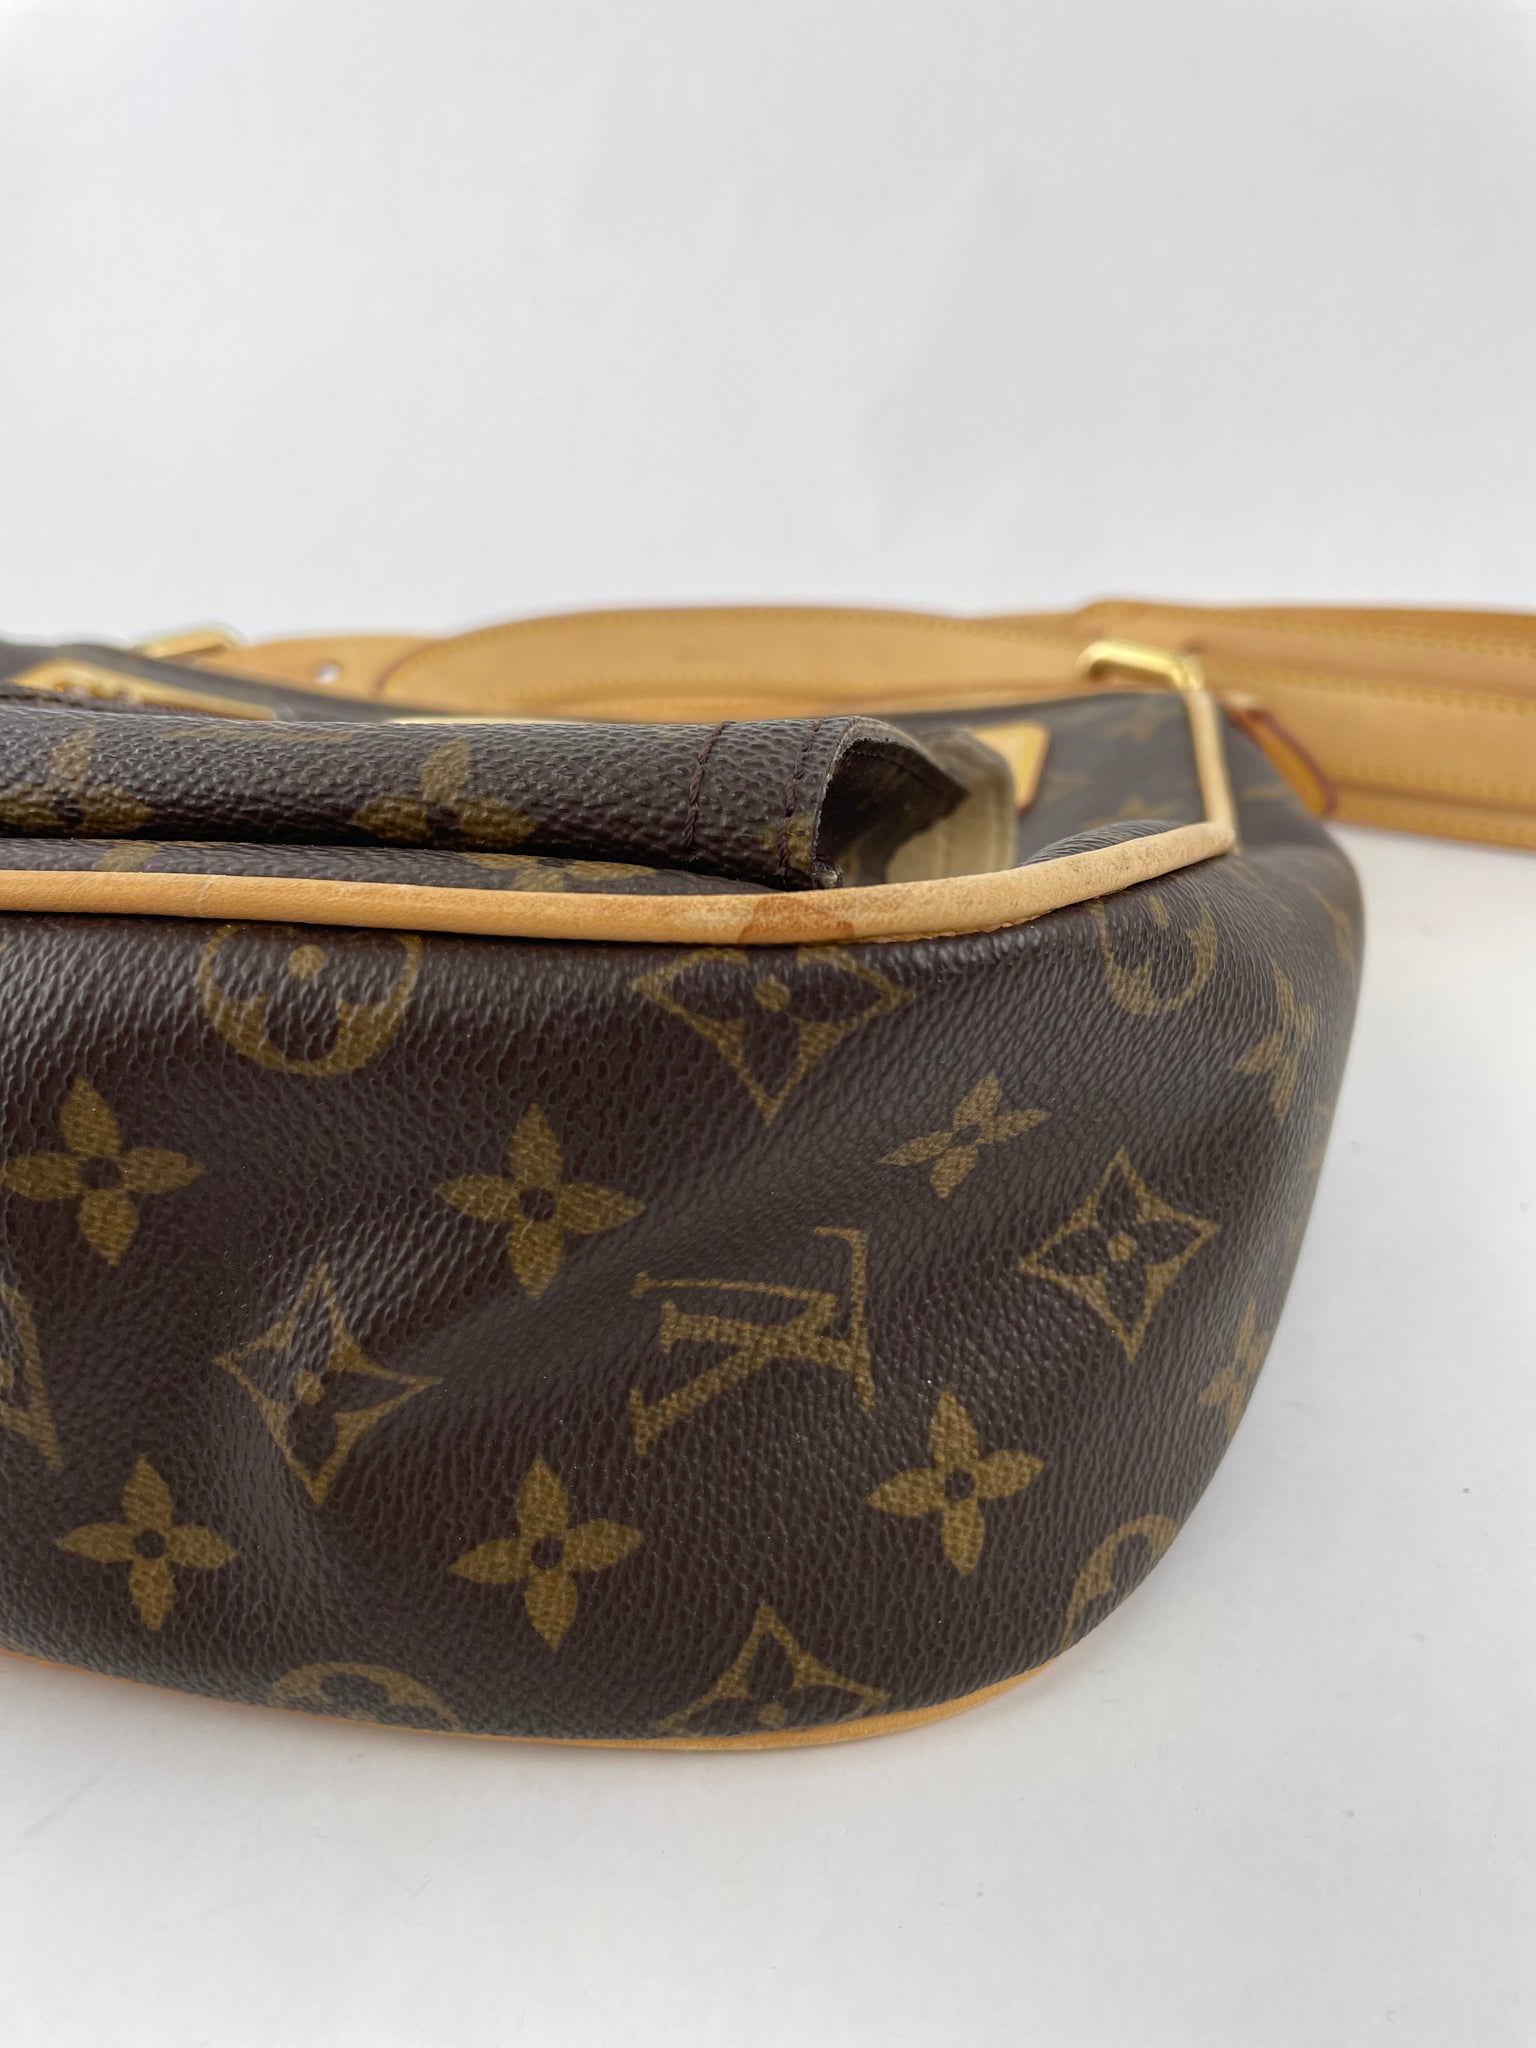 Lot 175 - A Louis Vuitton Hudson bag, in classic